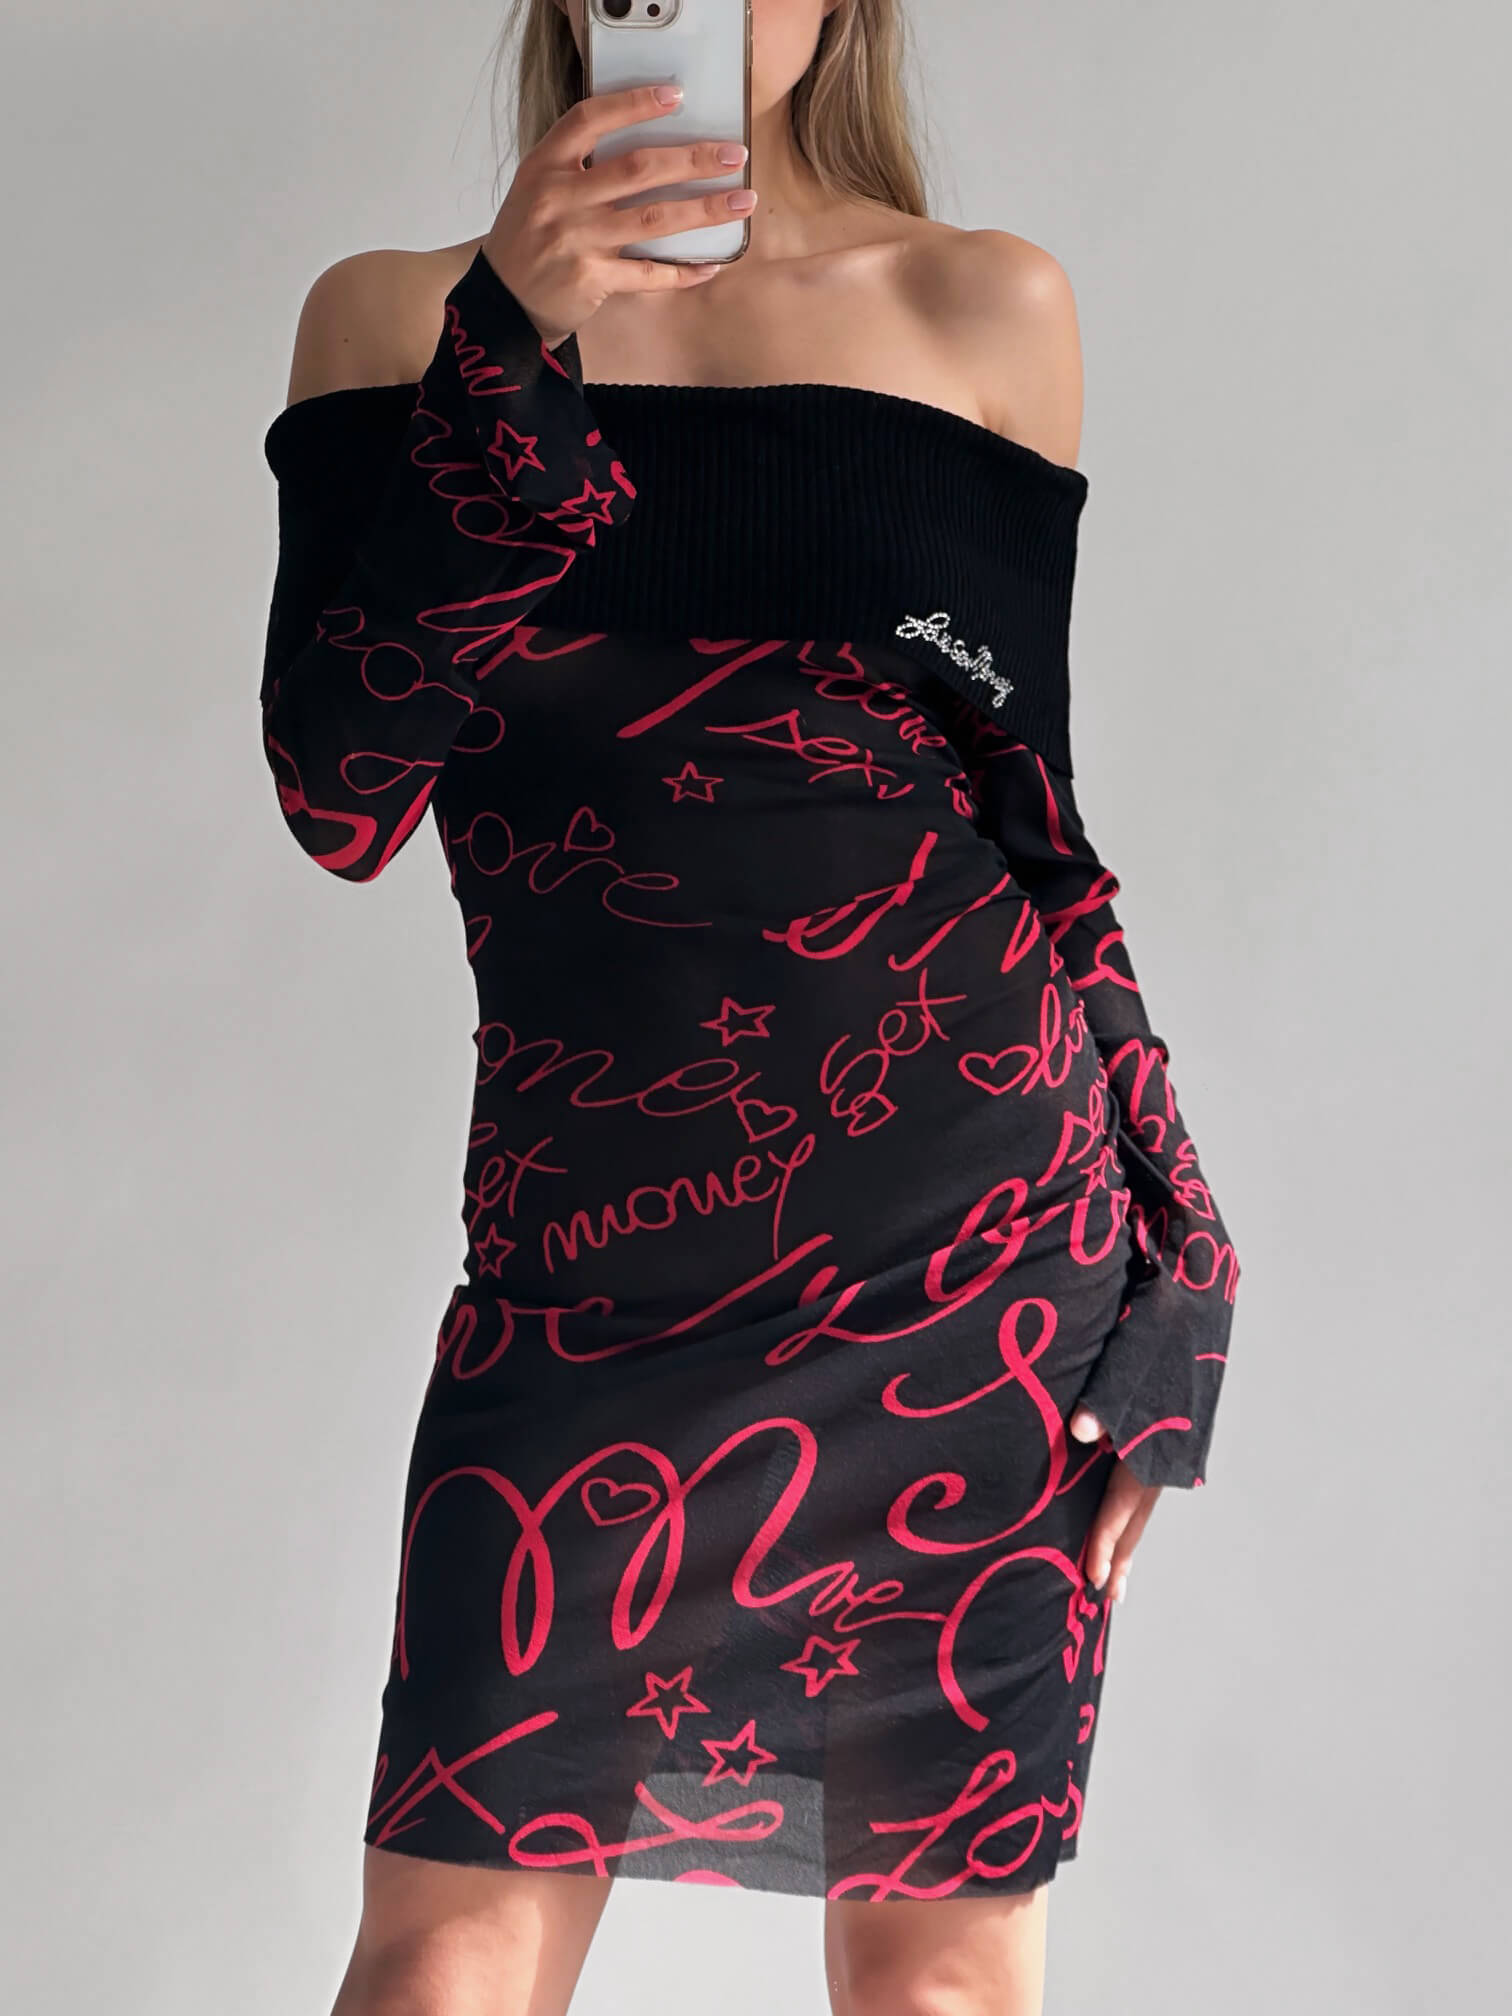 Vintage Italian Designer LOVE SEX MONEY Printed Mesh Dress| S/M